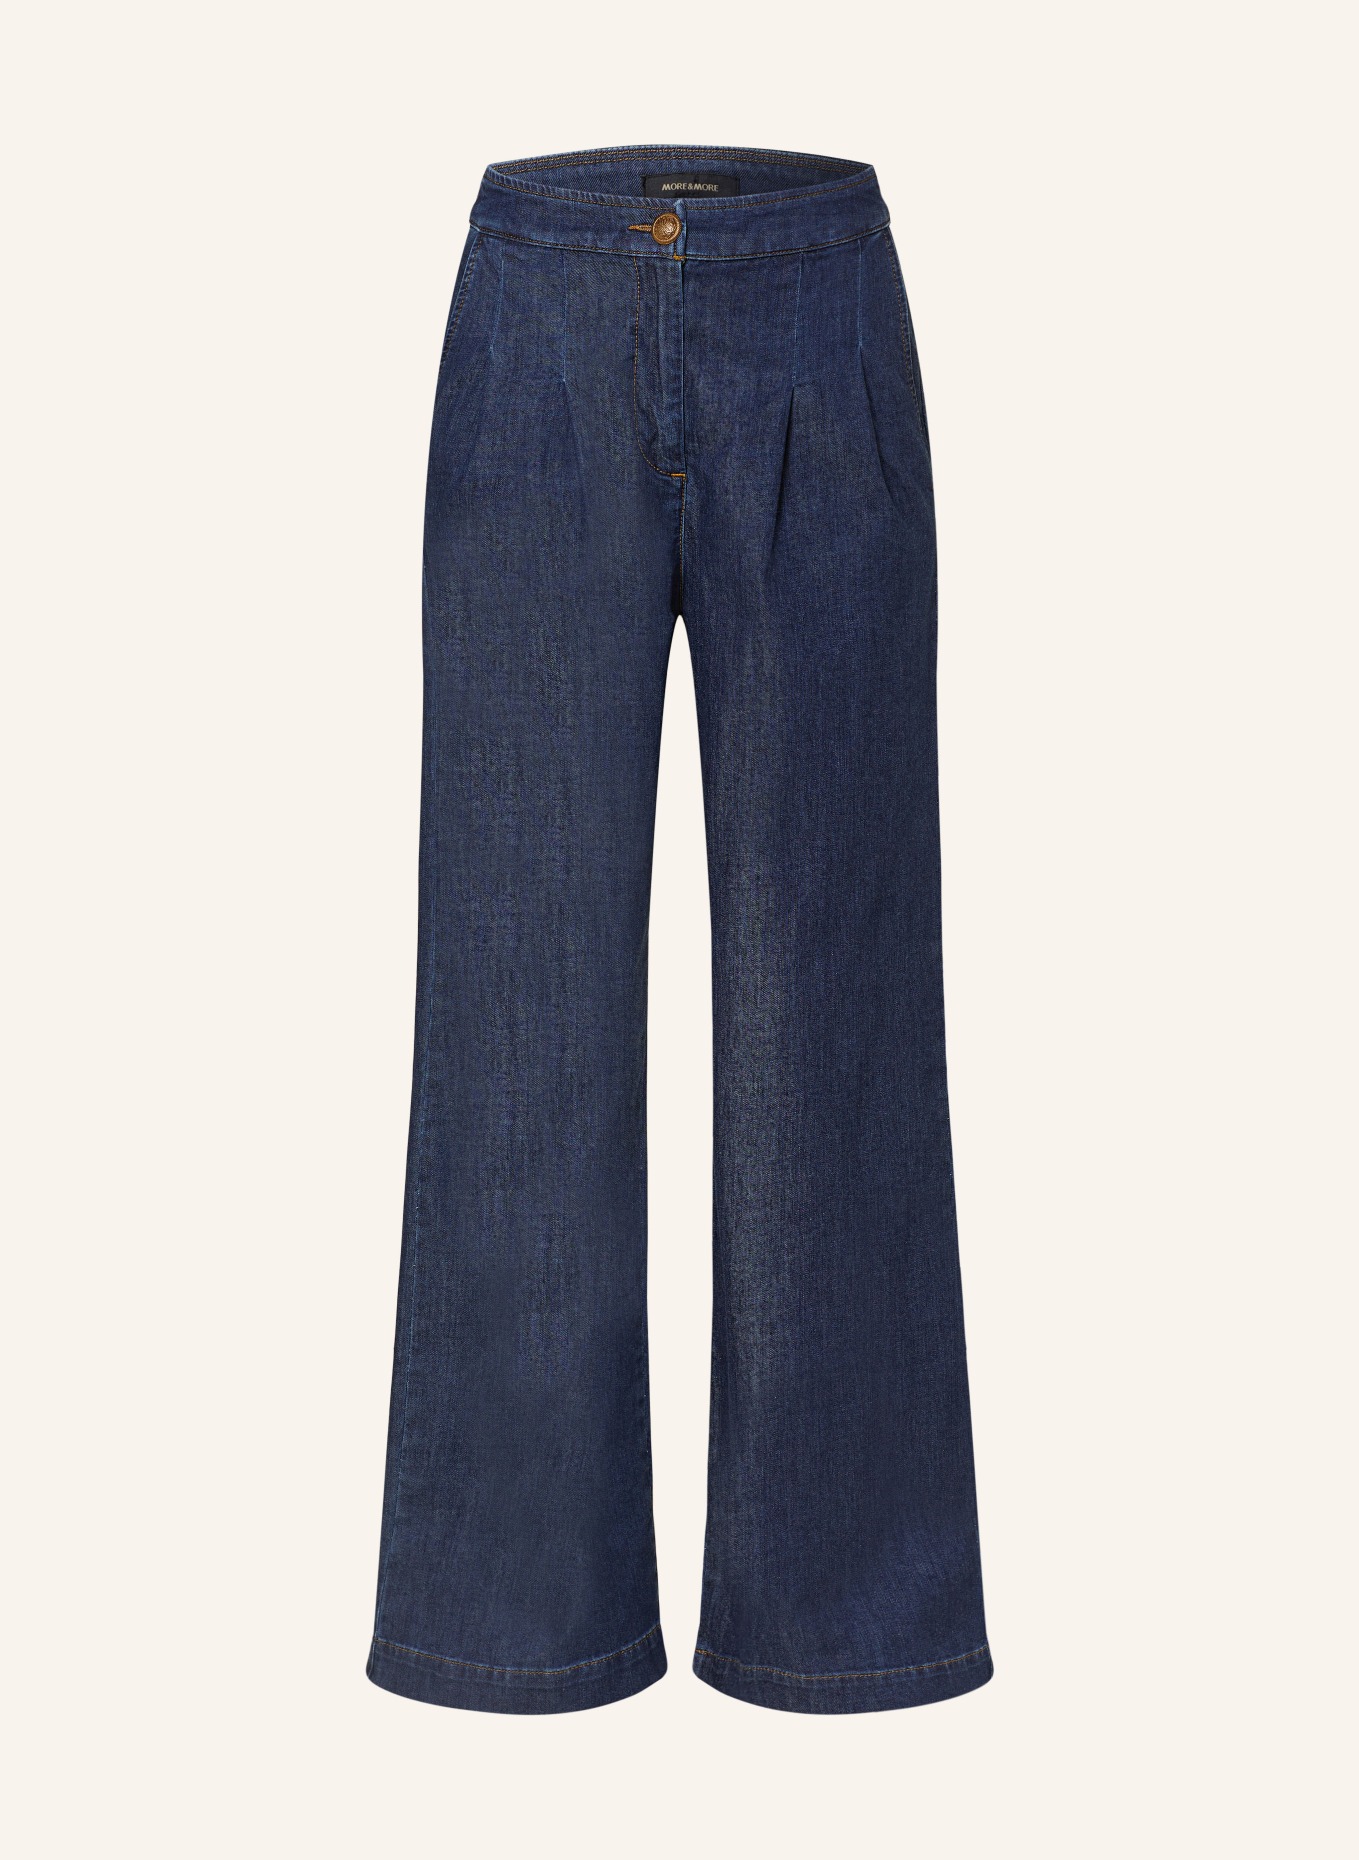 MORE & MORE Straight Jeans, Farbe: 0963 DARK BLUE DENIM (Bild 1)